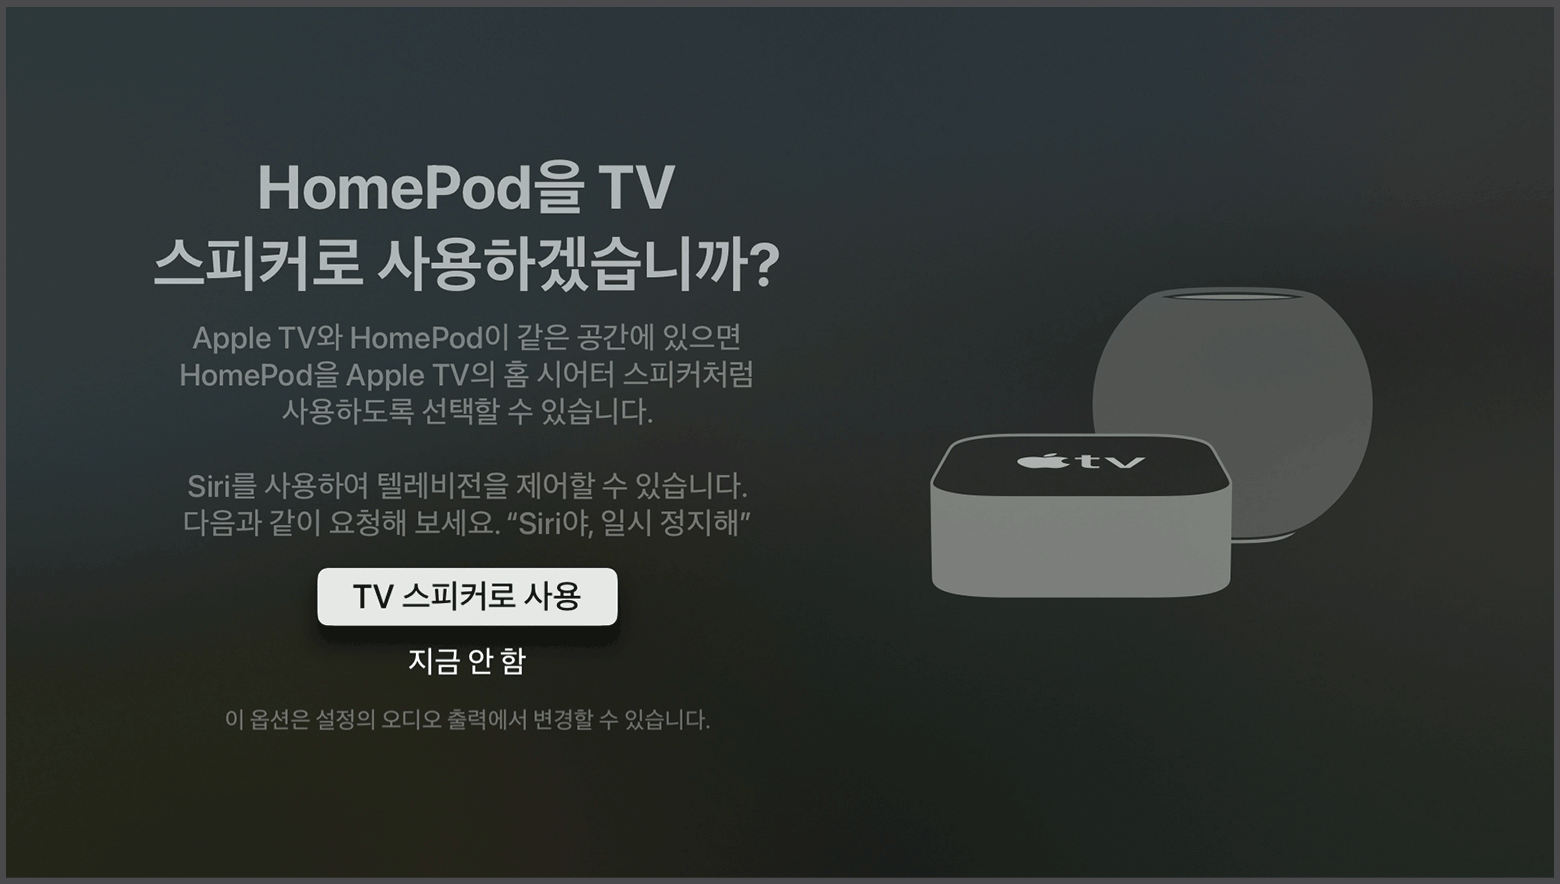 HomePod 스피커를 Apple TV의 스피커로 사용할지 묻는 메시지가 표시된 tvOS 스크린샷